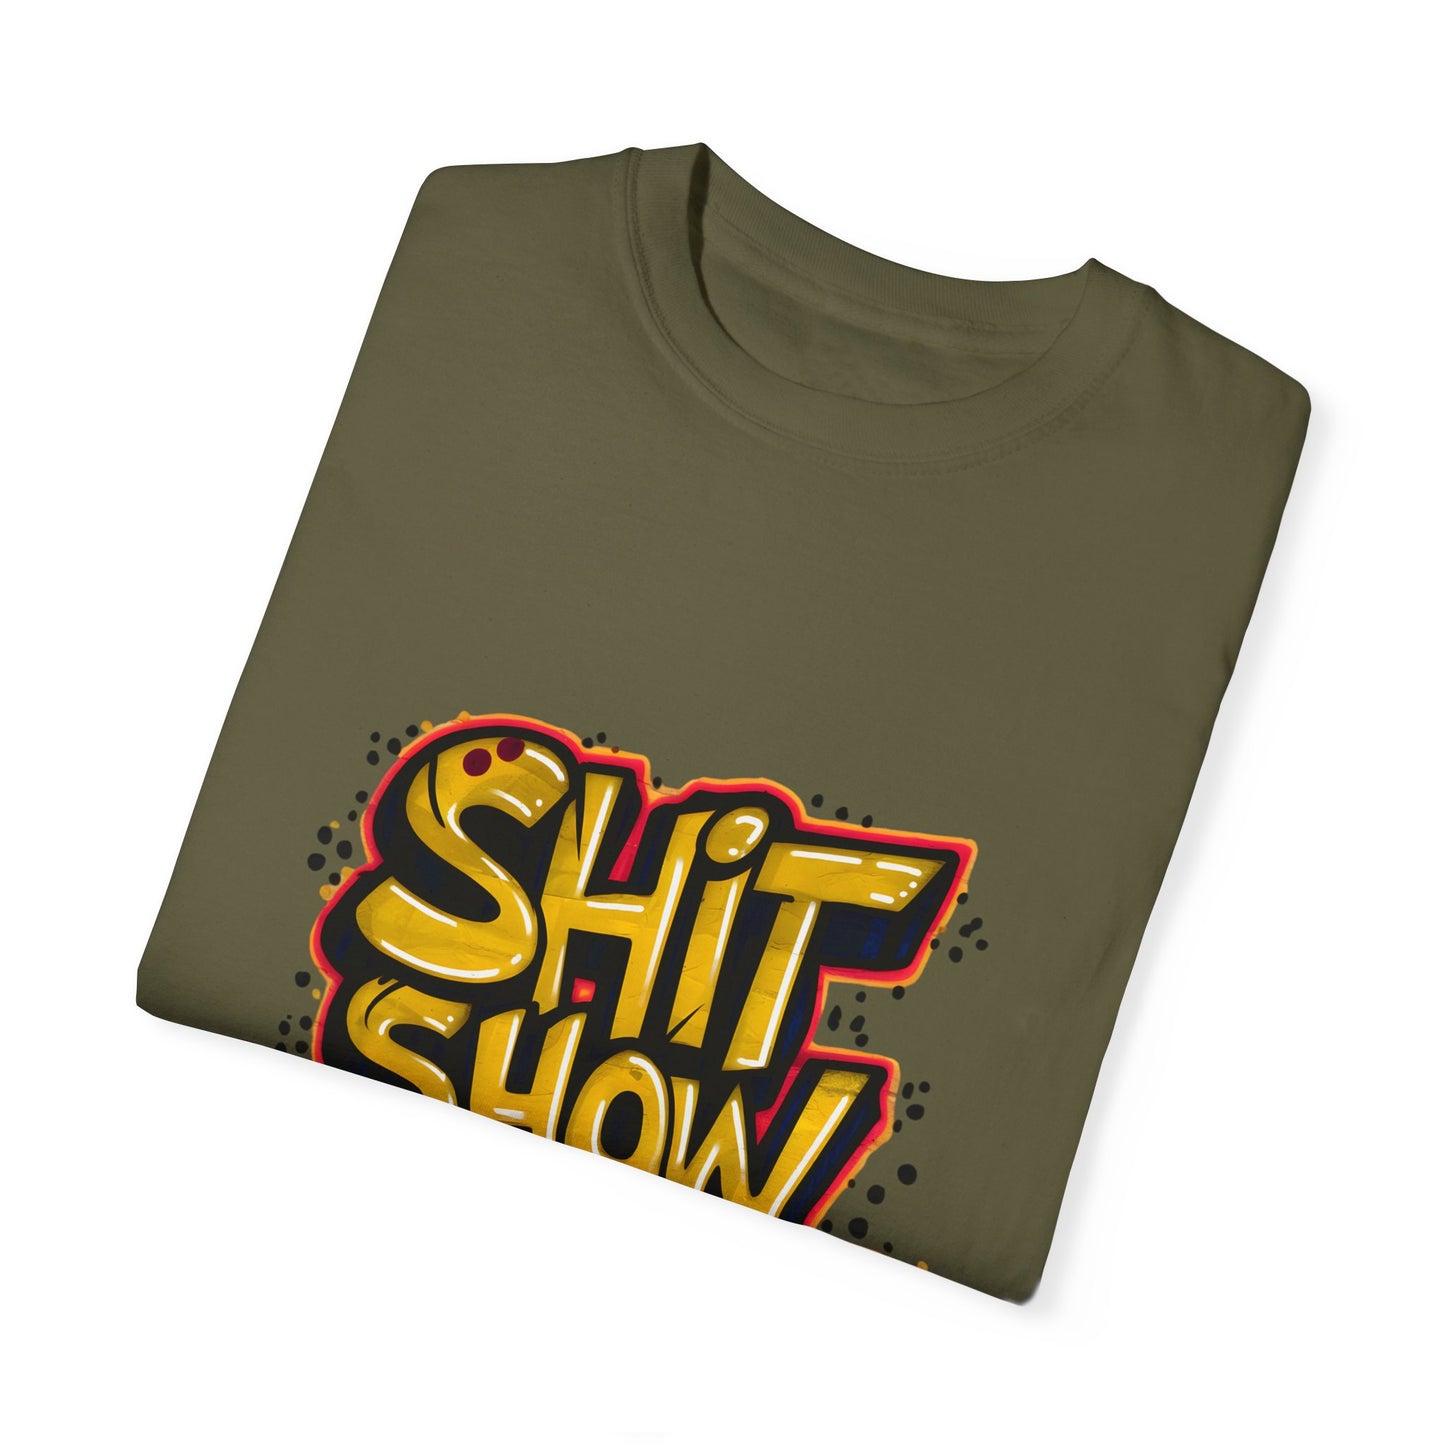 Shit Show Supervisor Urban Sarcastic Graphic Unisex Garment Dyed T-shirt Cotton Funny Humorous Graphic Soft Premium Unisex Men Women Sage T-shirt Birthday Gift-53